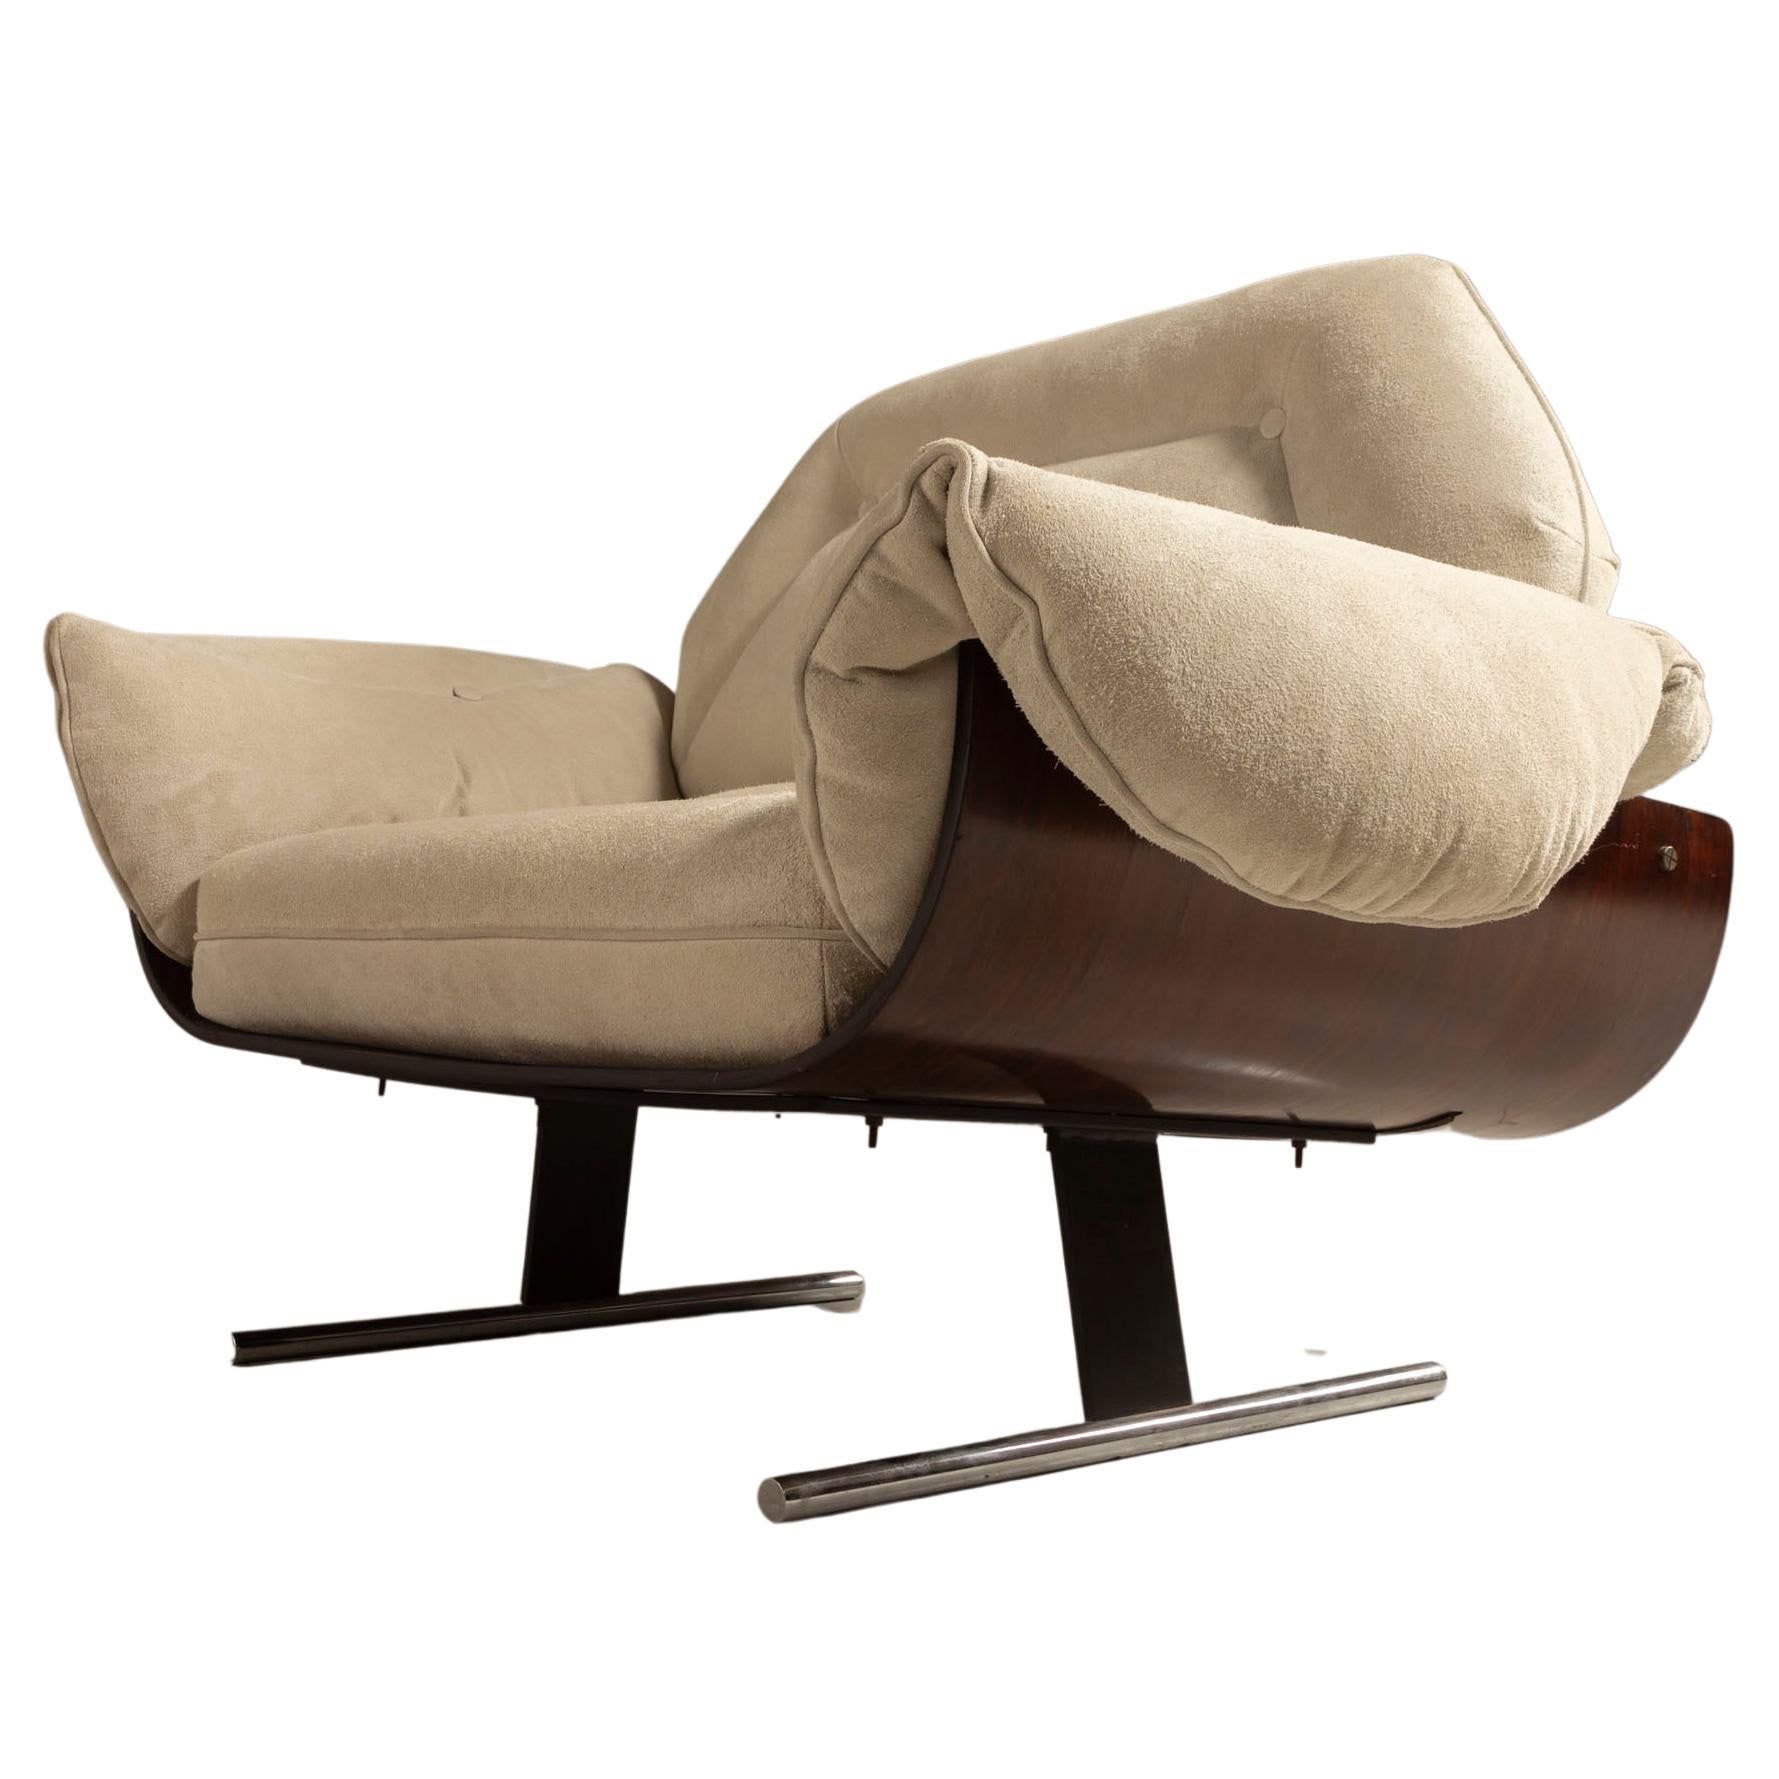 Jorge Zalszupin's Presidential Lounge Chair, Brazilian Mid-Century Modern Design For Sale